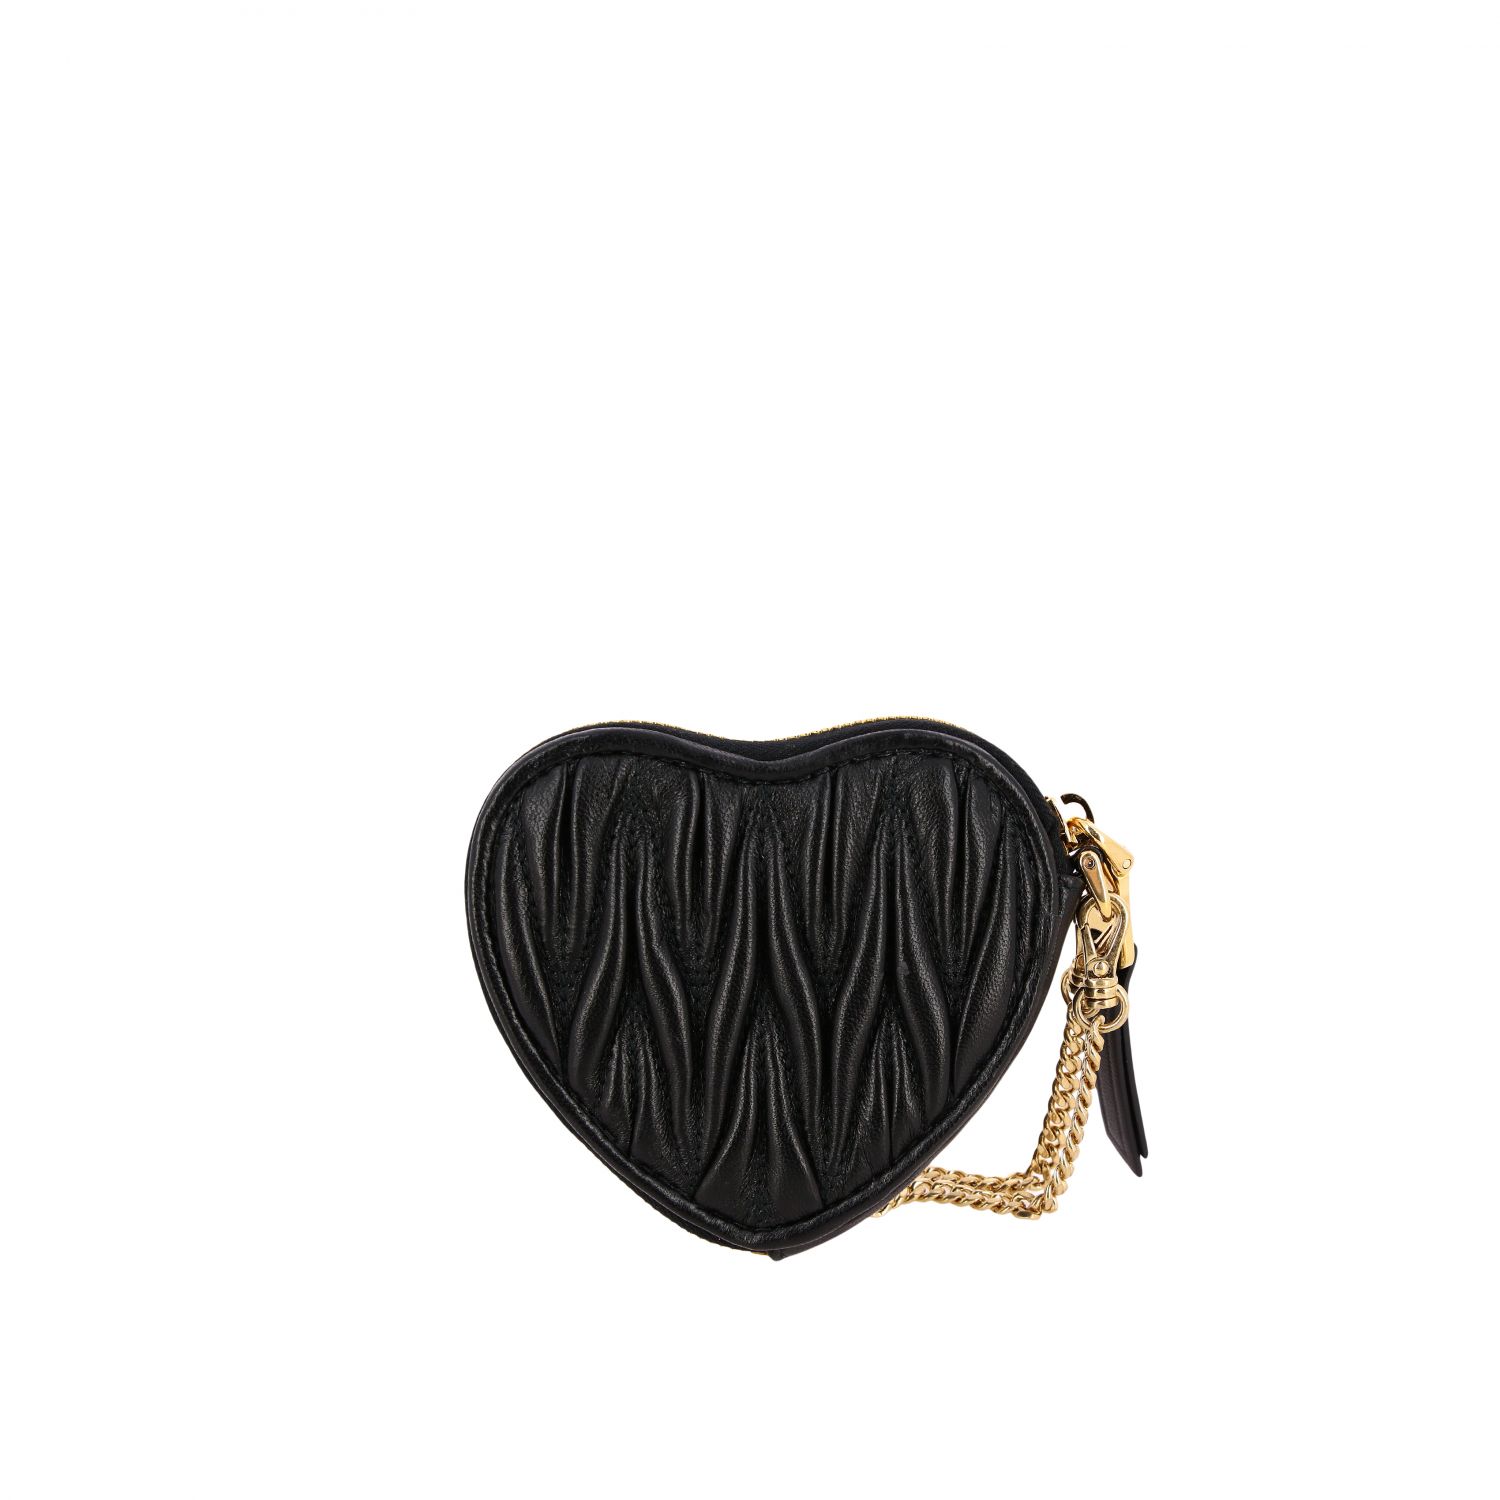 MIU MIU: Heart-shaped purse in matelassé leather | Wallet Miu Miu Women ...